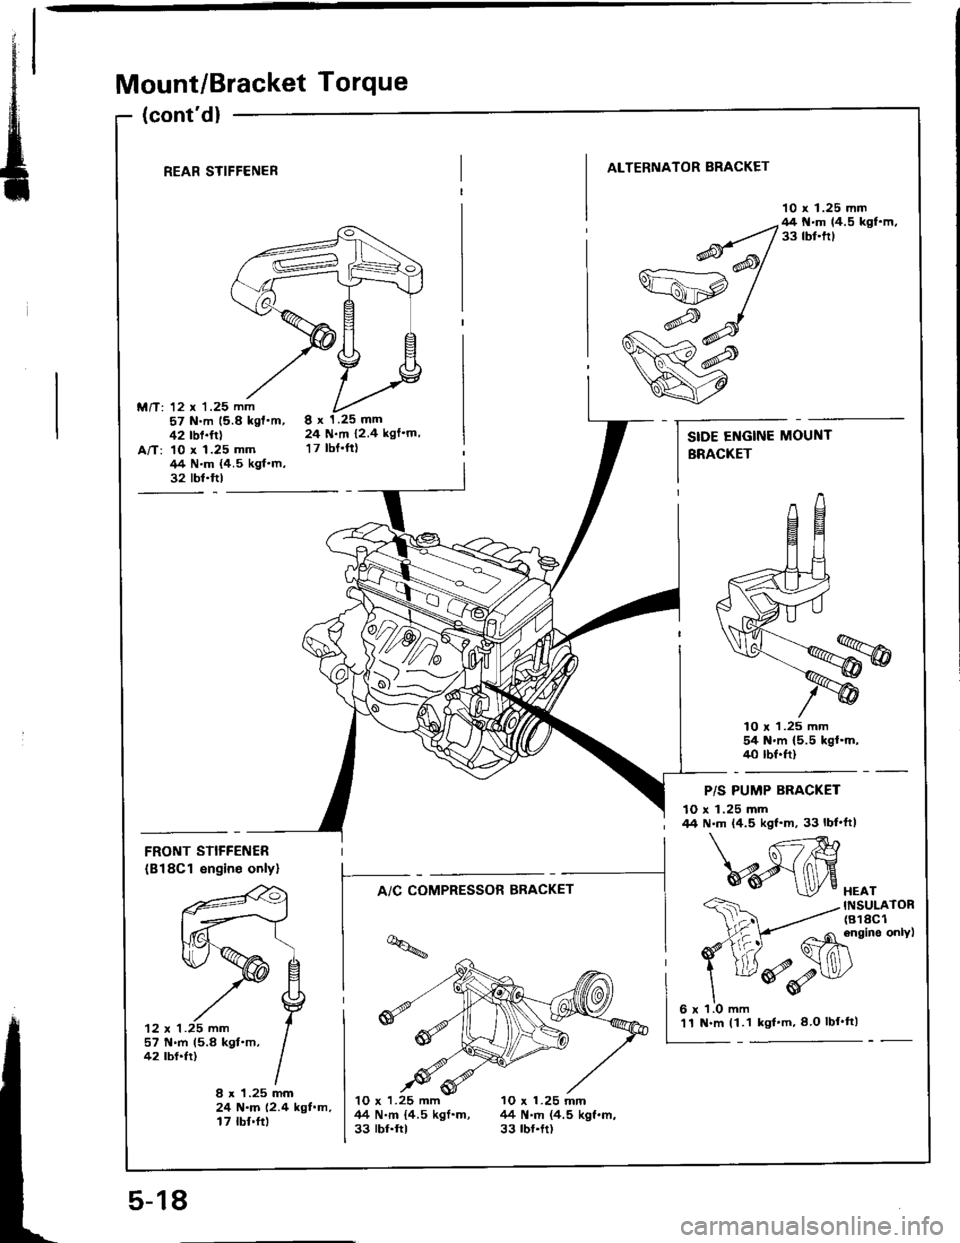 HONDA INTEGRA 1994 4.G Workshop Manual Mount/Bracket Torque
(contd)
REAR STIFFENER
M/T: 12 x 1.25 mm57 N.m 15.8 kgfm,42 rbf.ft)A/T: 10 x 1.25 mm/14 N.m {4.5 kgf.m,32 tbt.ftl
ALTERNATOR BRACKET
10 x 1.25 mm
8x1.25mm24 N.m 12.4 kgfm,
17 